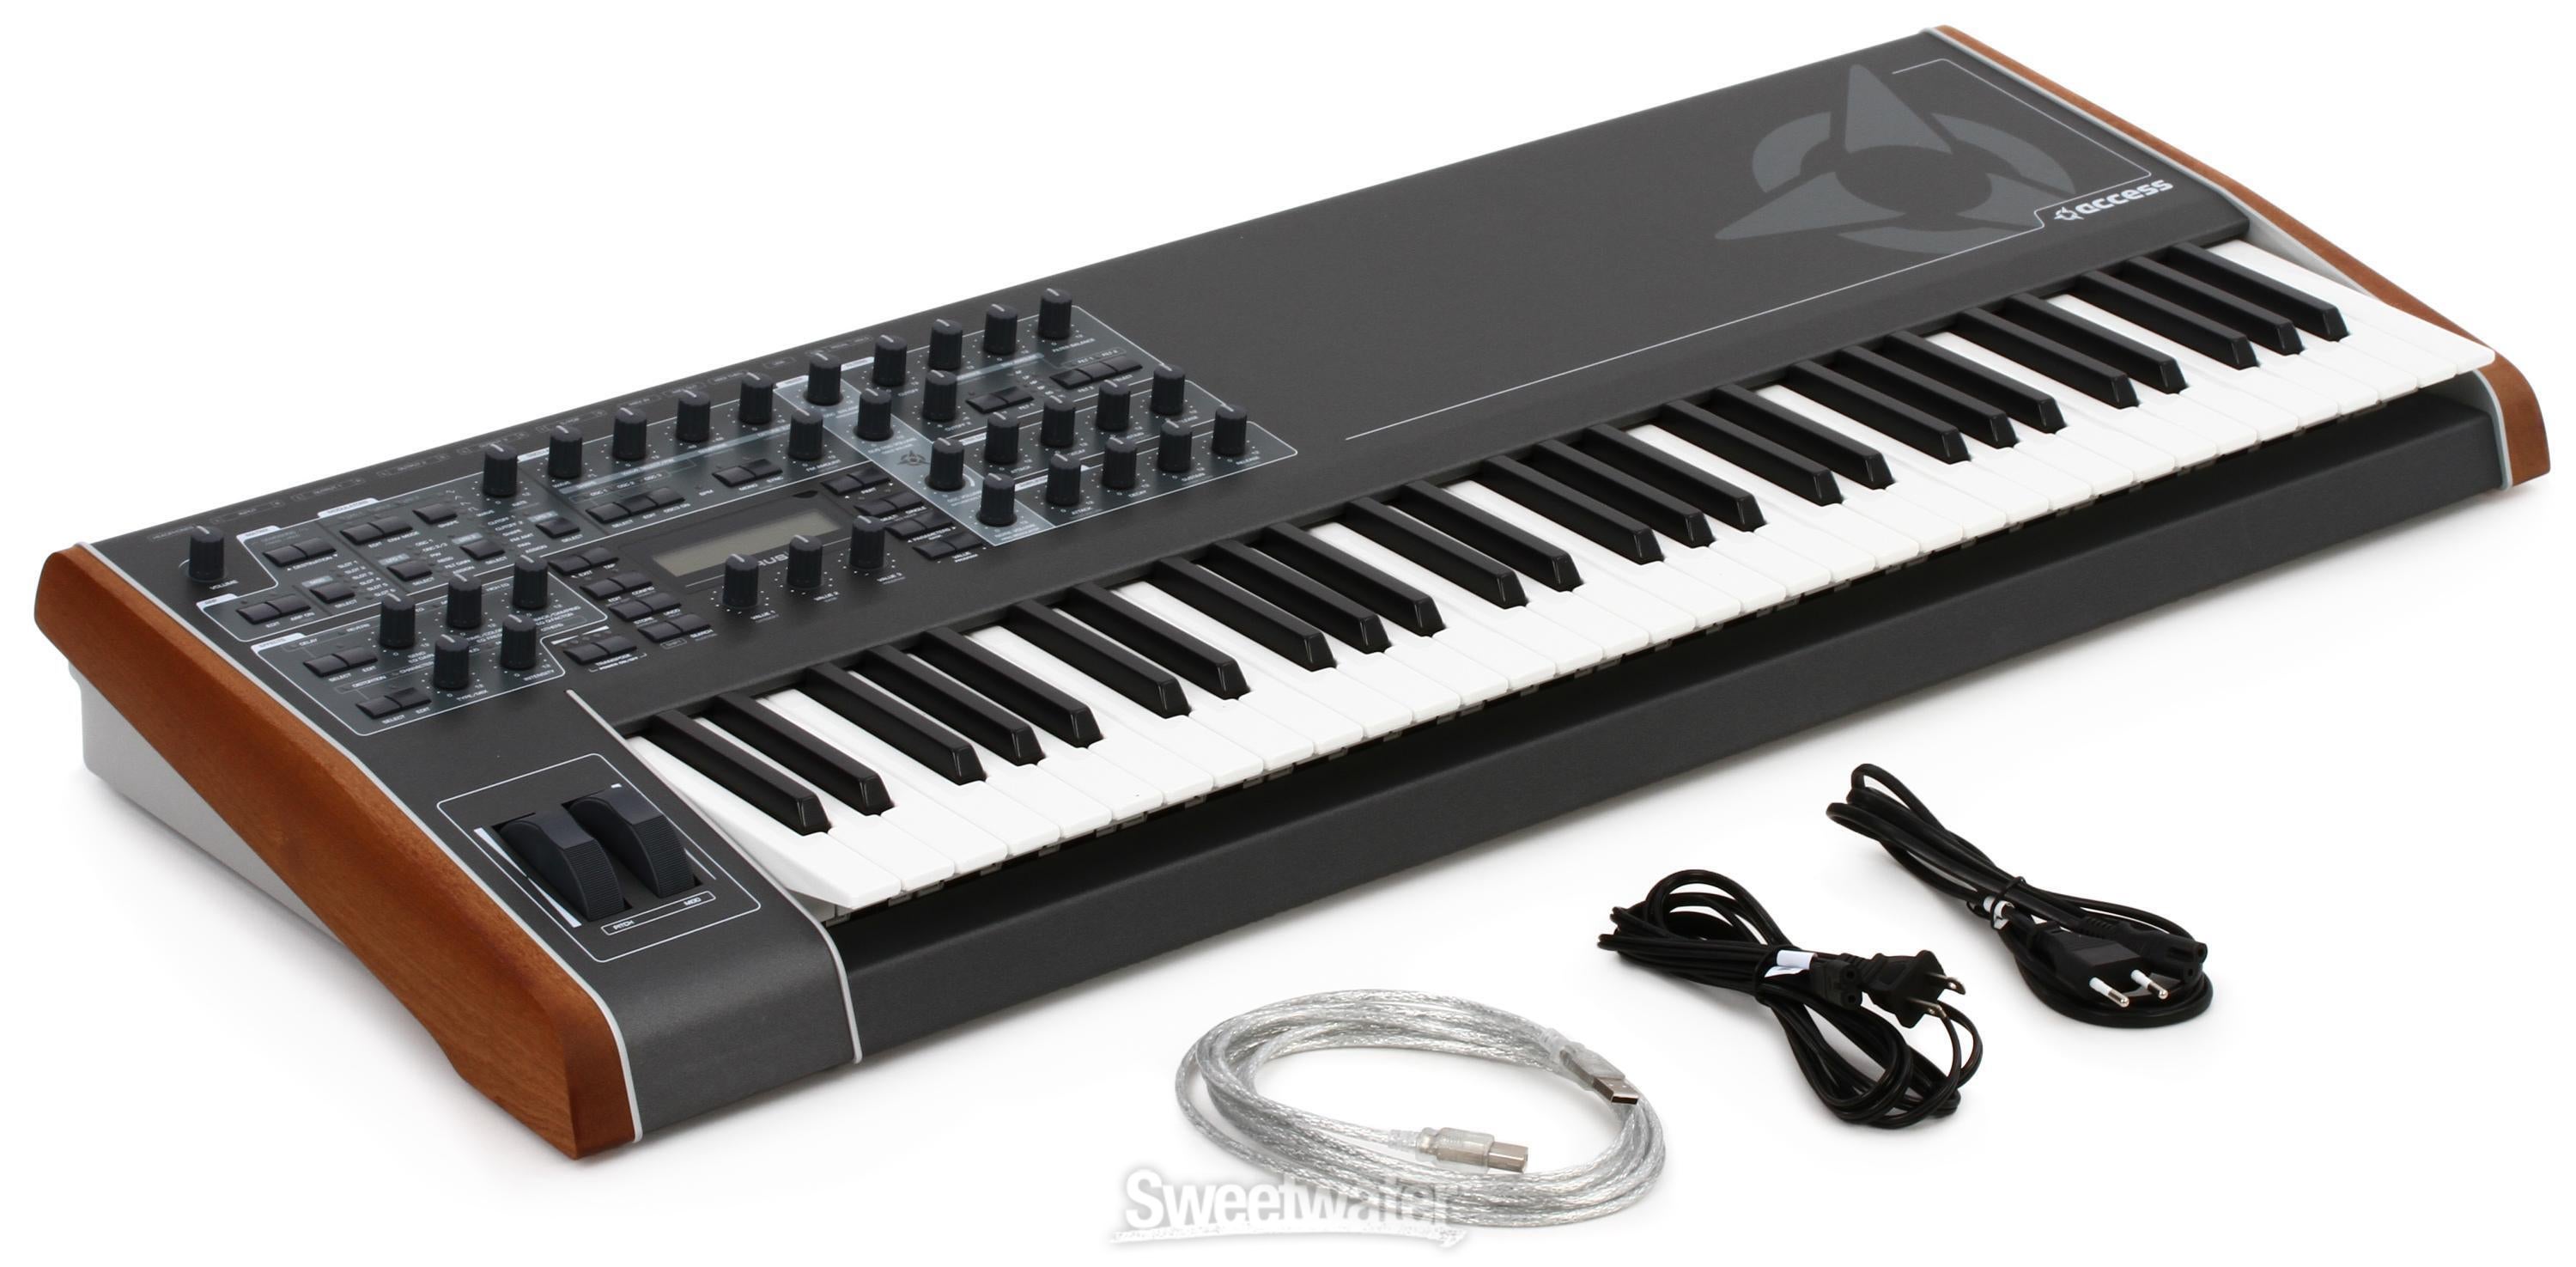 Access Virus TI2 Keyboard 61-key Synthesizer | Sweetwater